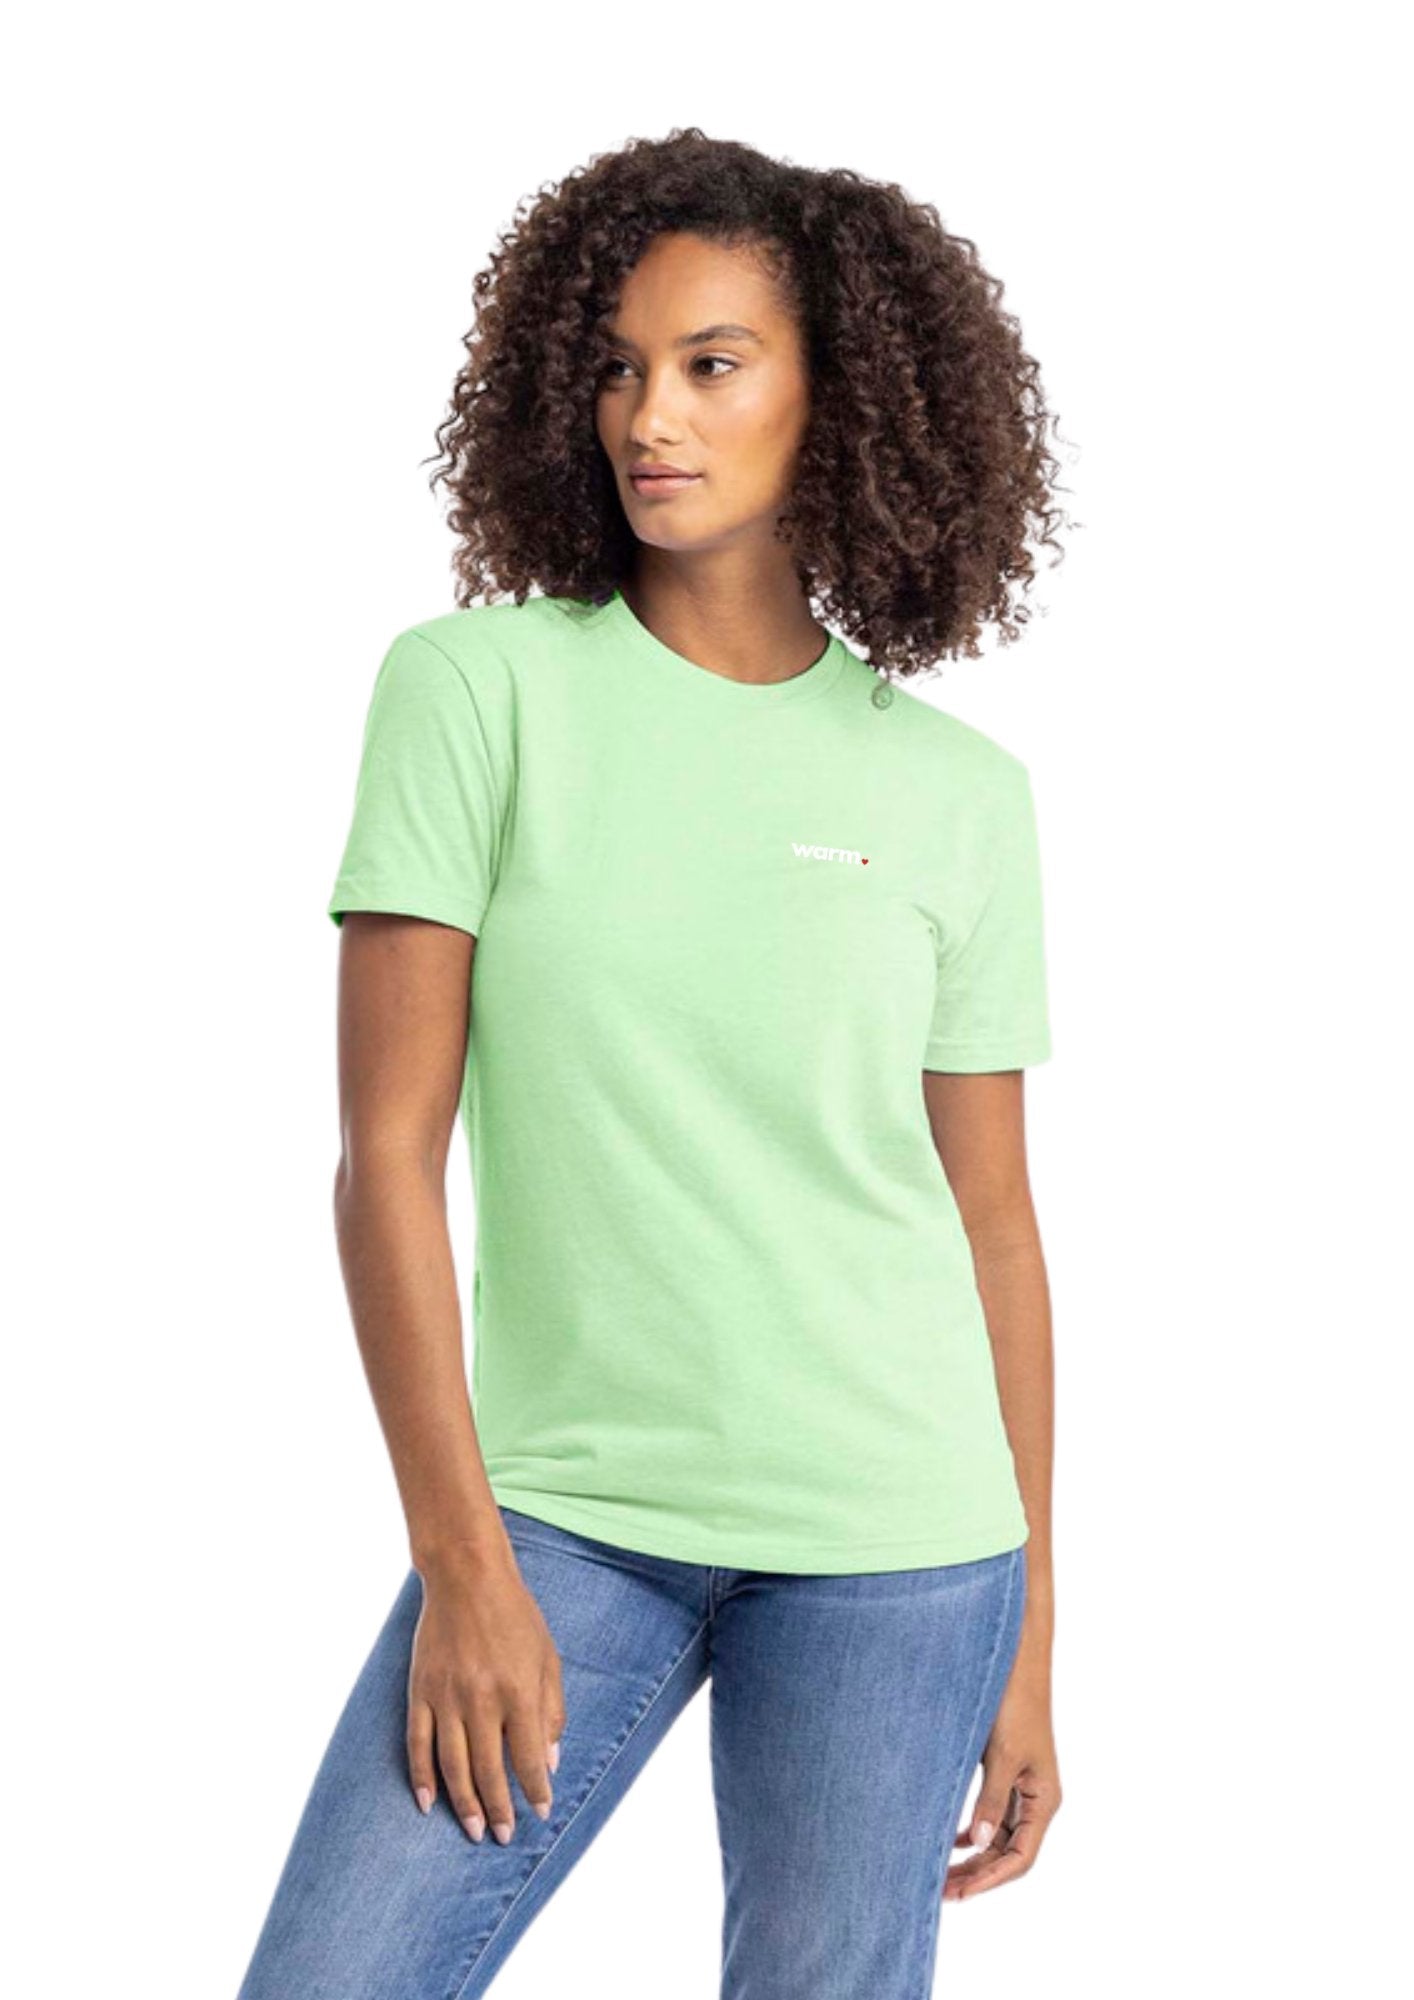 Premium Mint T-Shirt (Women's)